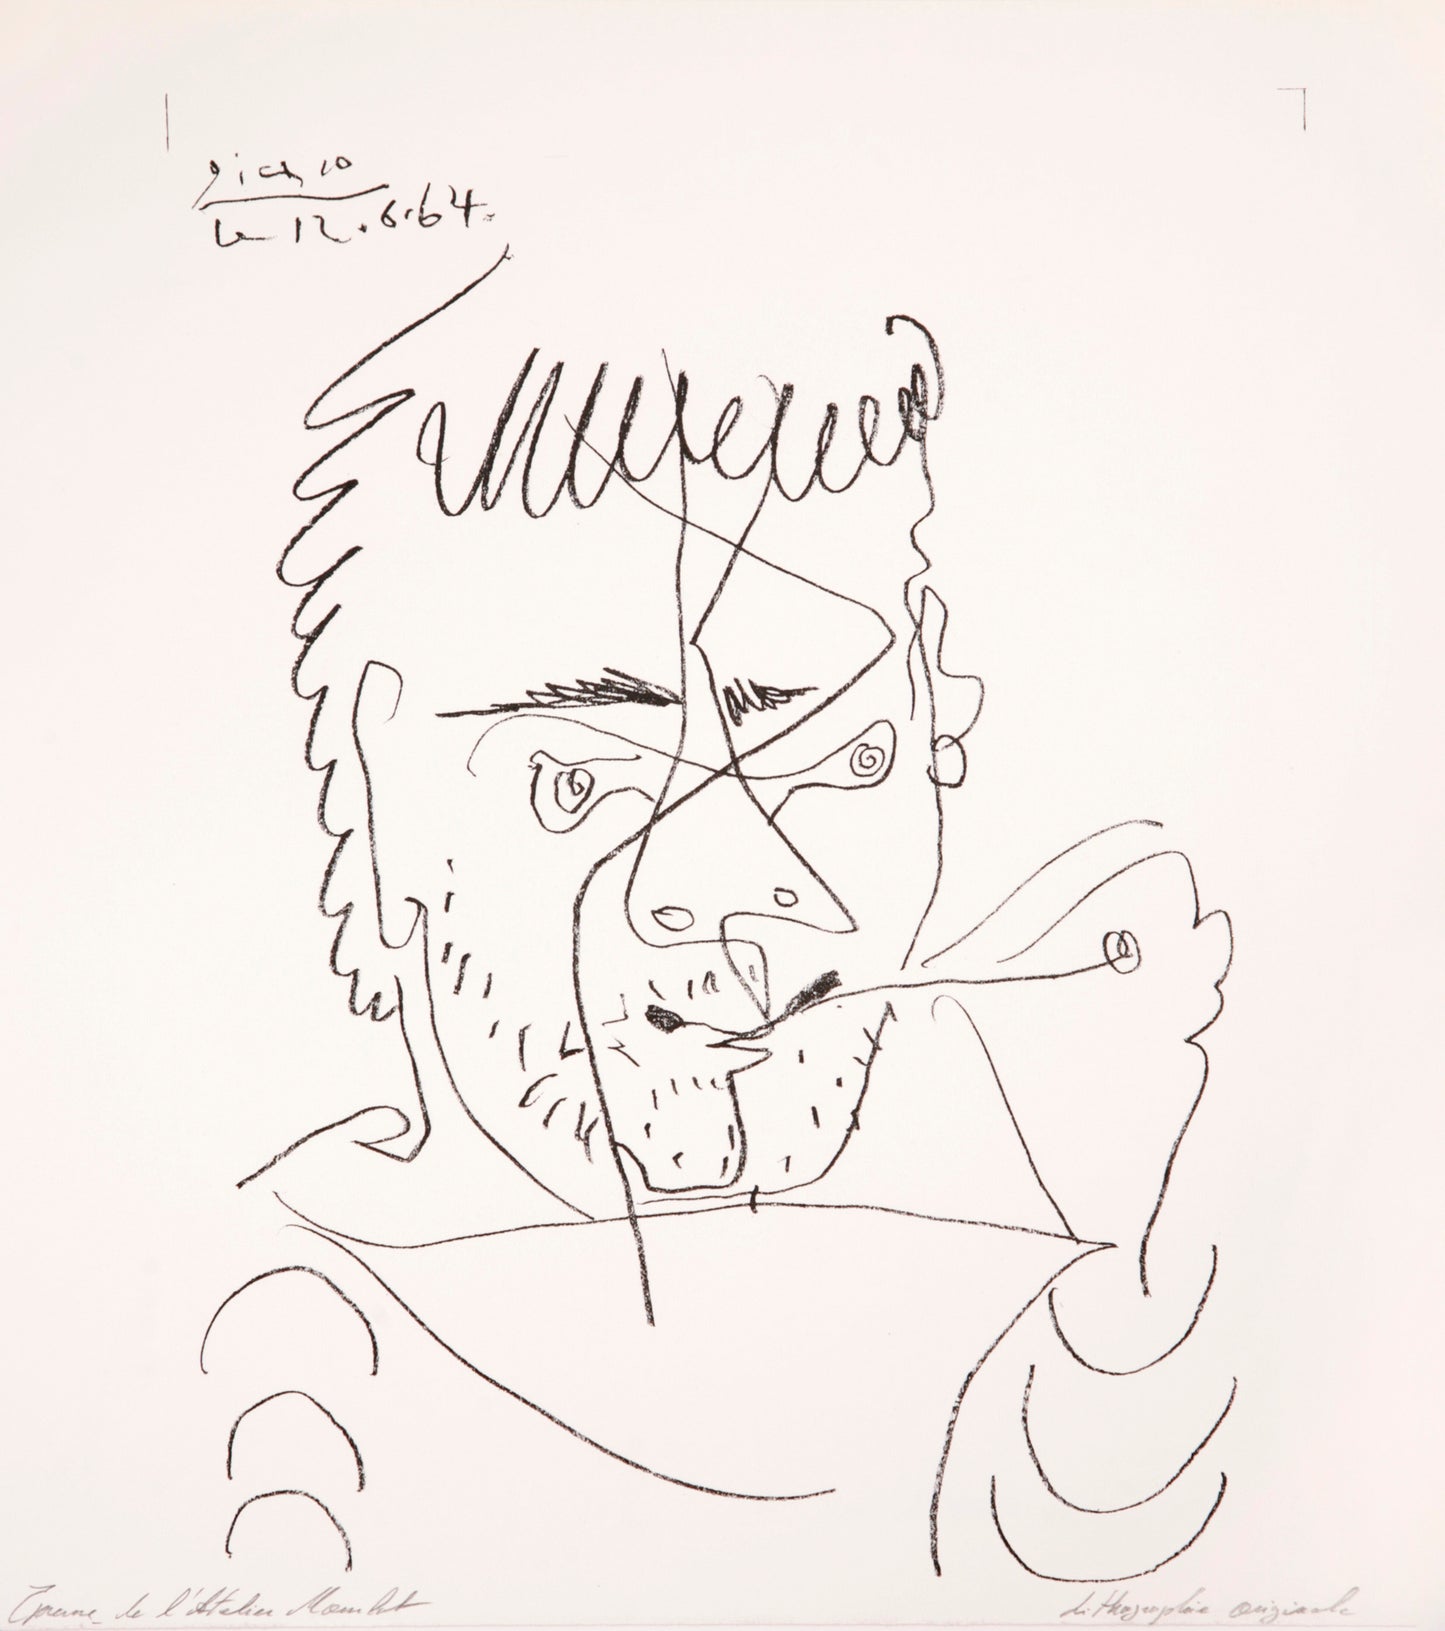 The Smoker, Daniel Henri Kahnweiler by Pablo Picasso - Mourlot Editions - Fine_Art - Poster - Lithograph - Wall Art - Vintage - Prints - Original